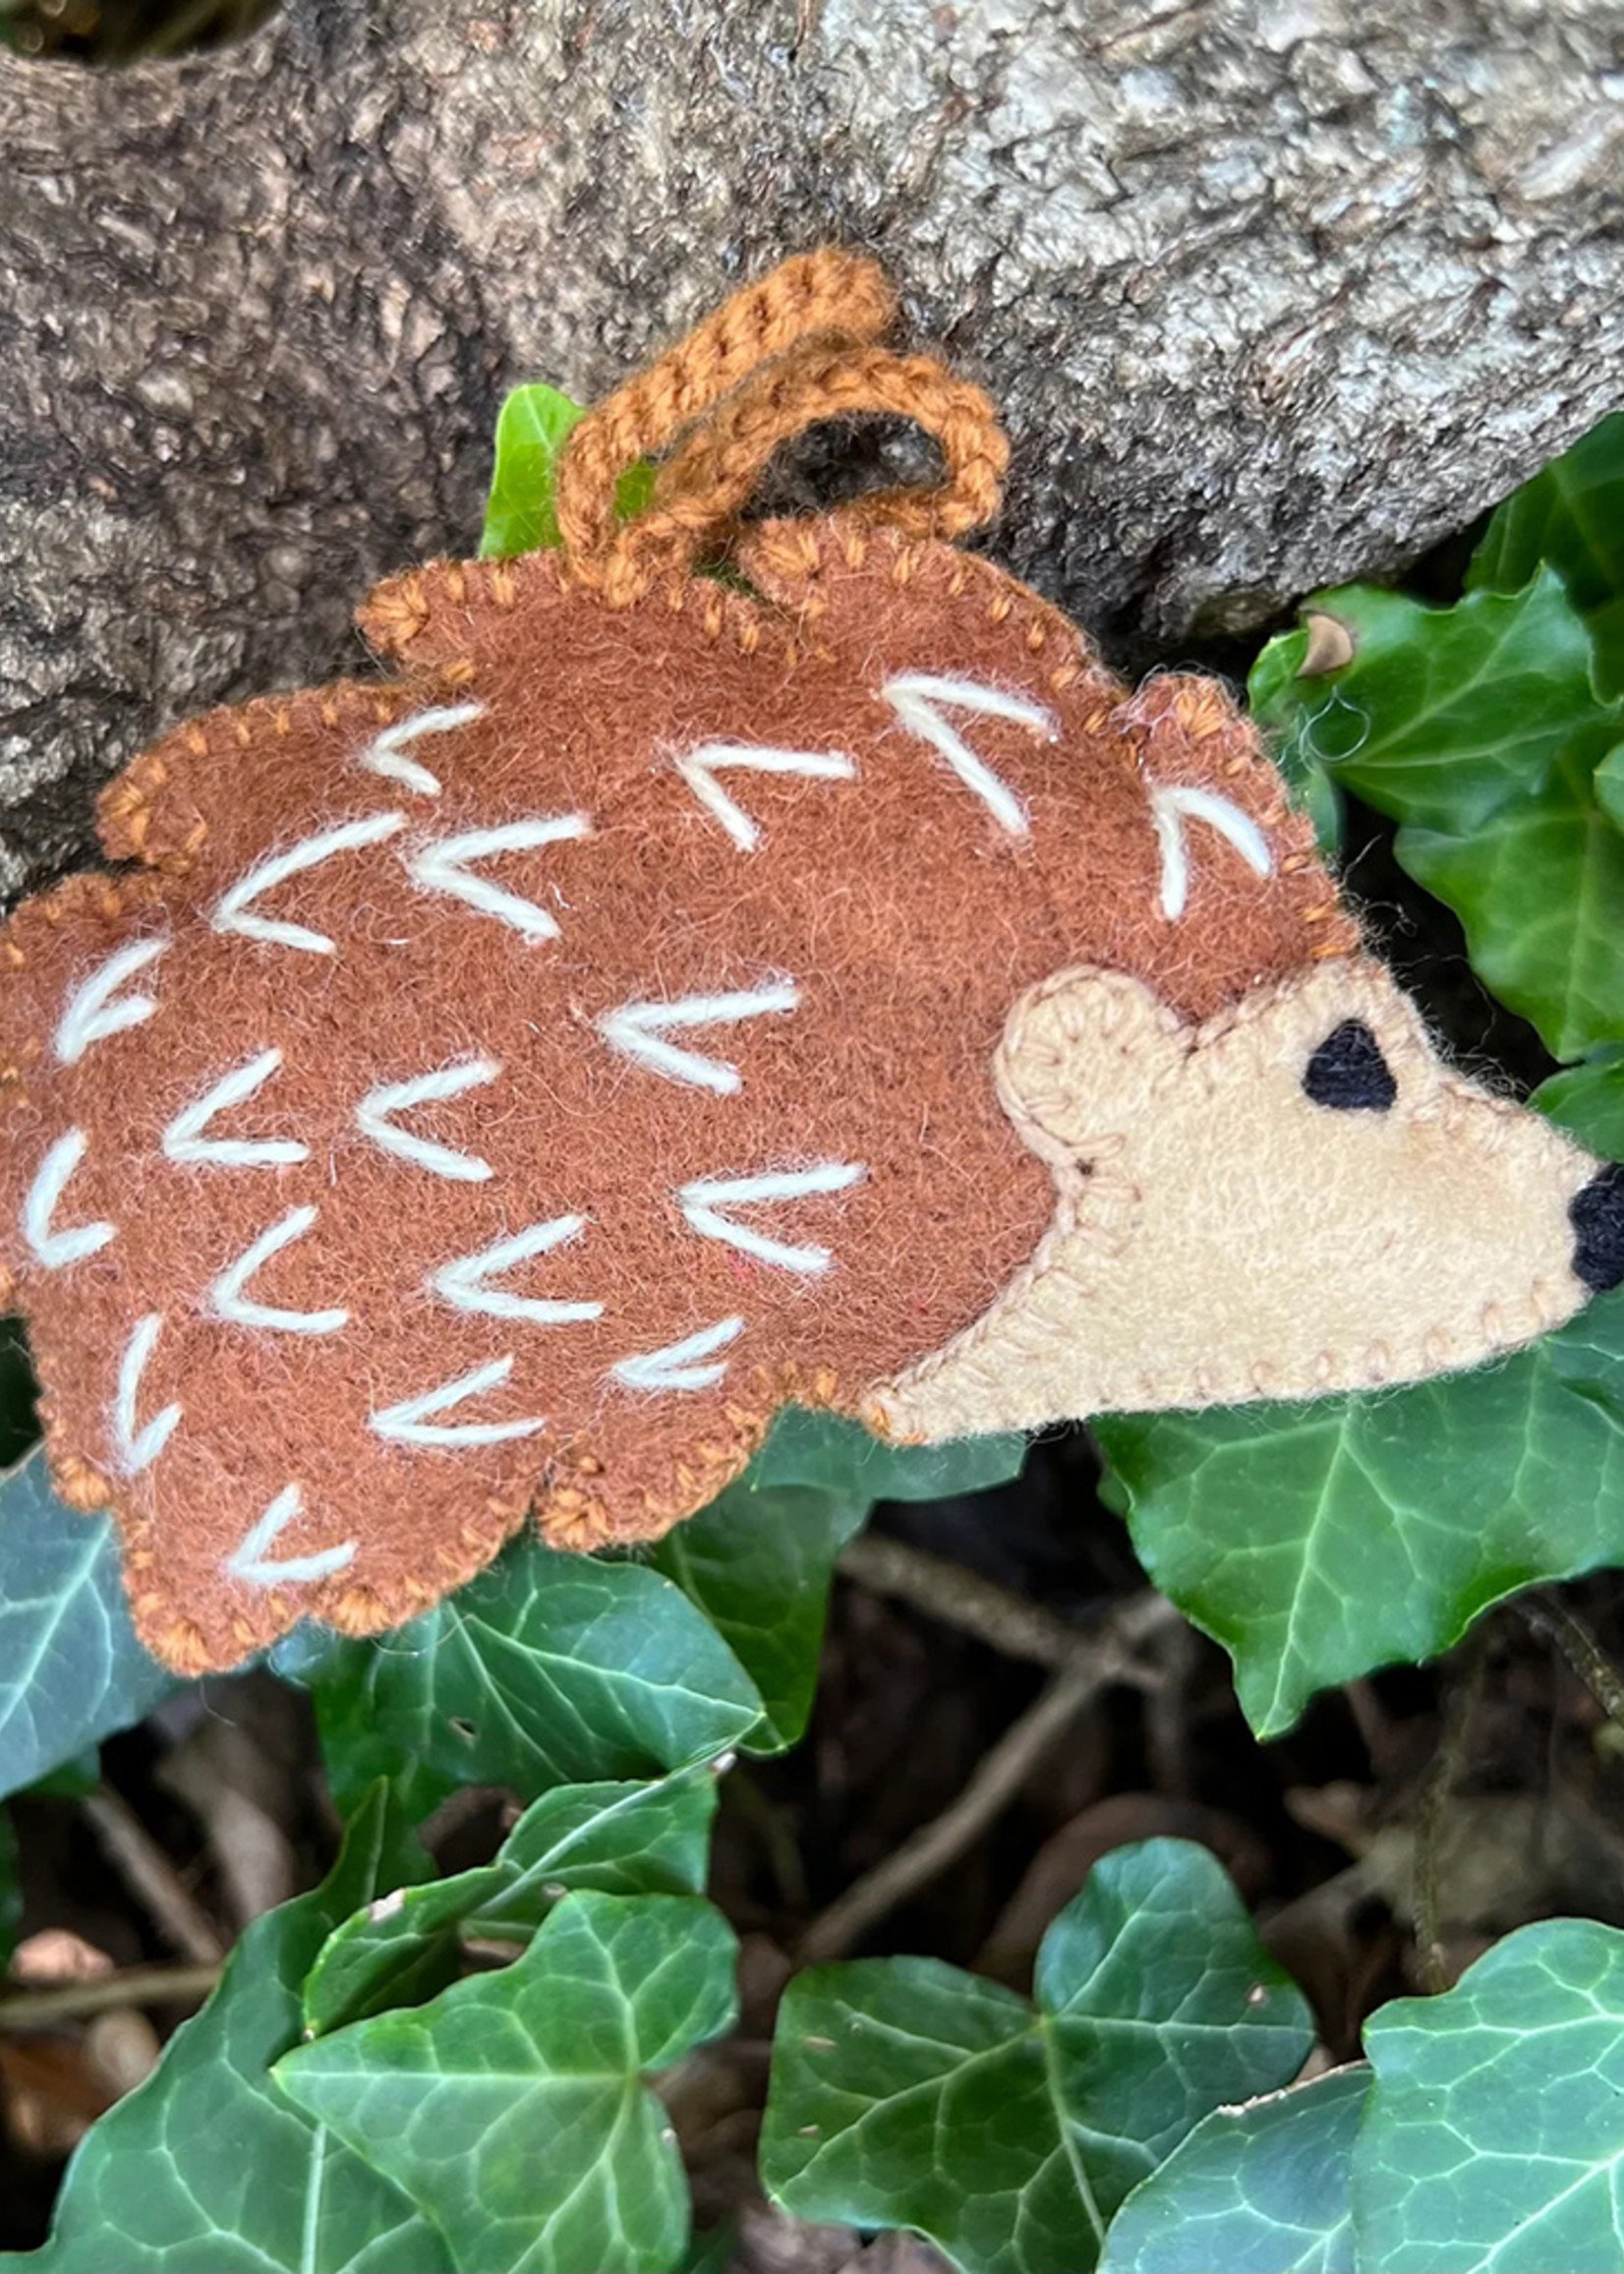 Felt Hedgehog Ornament